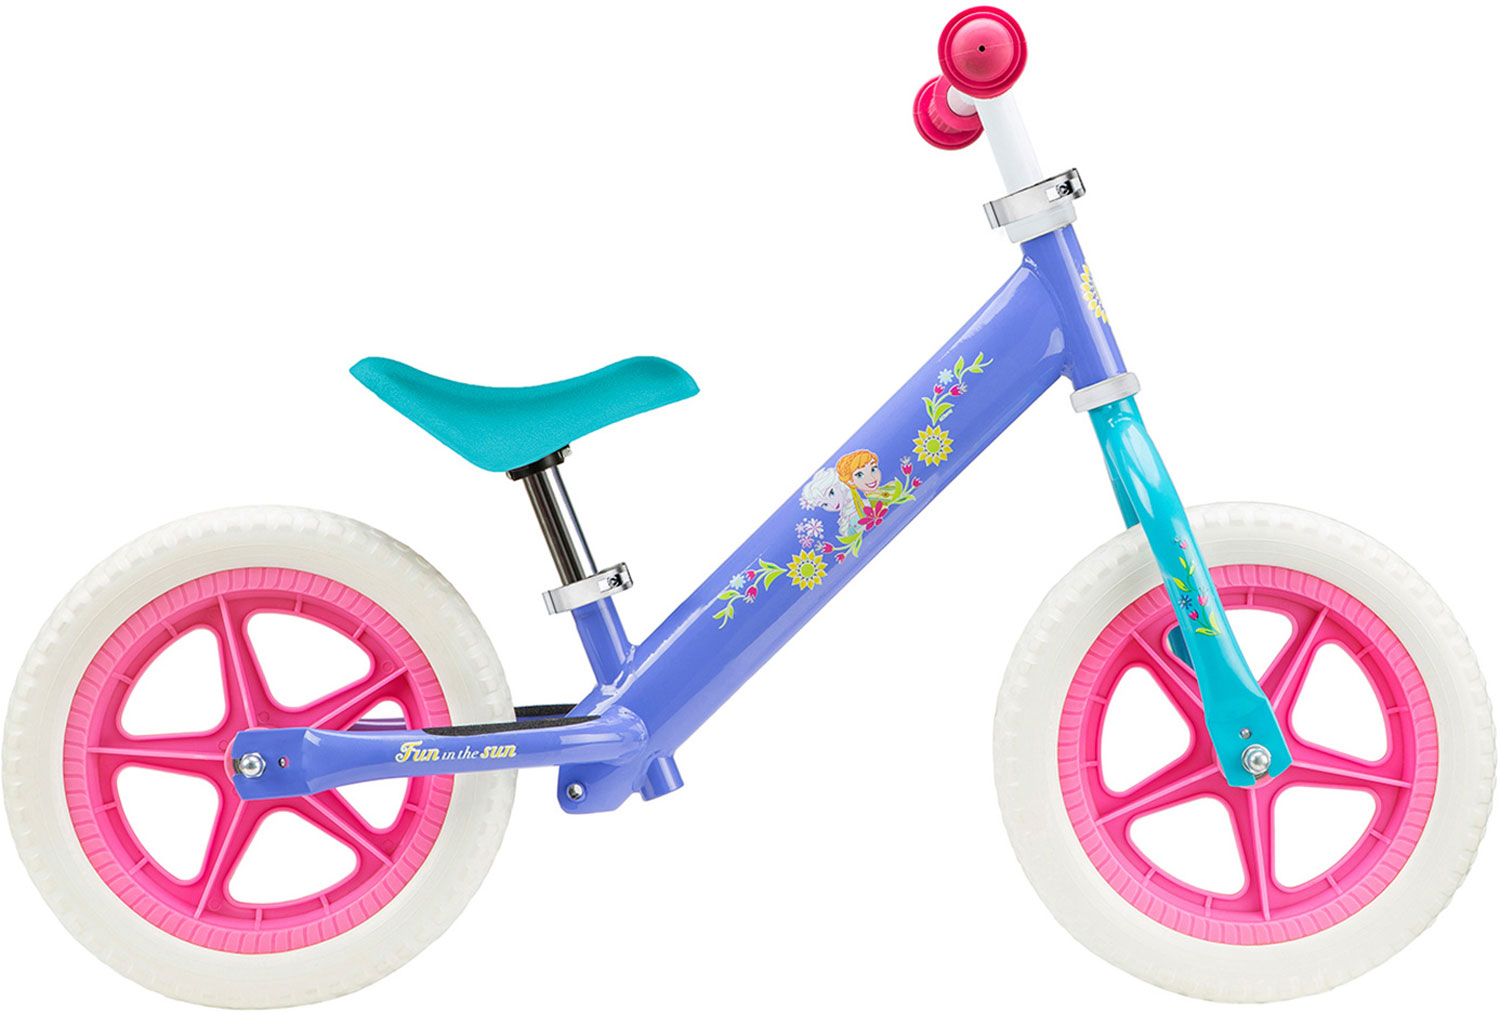 Children’s push bike